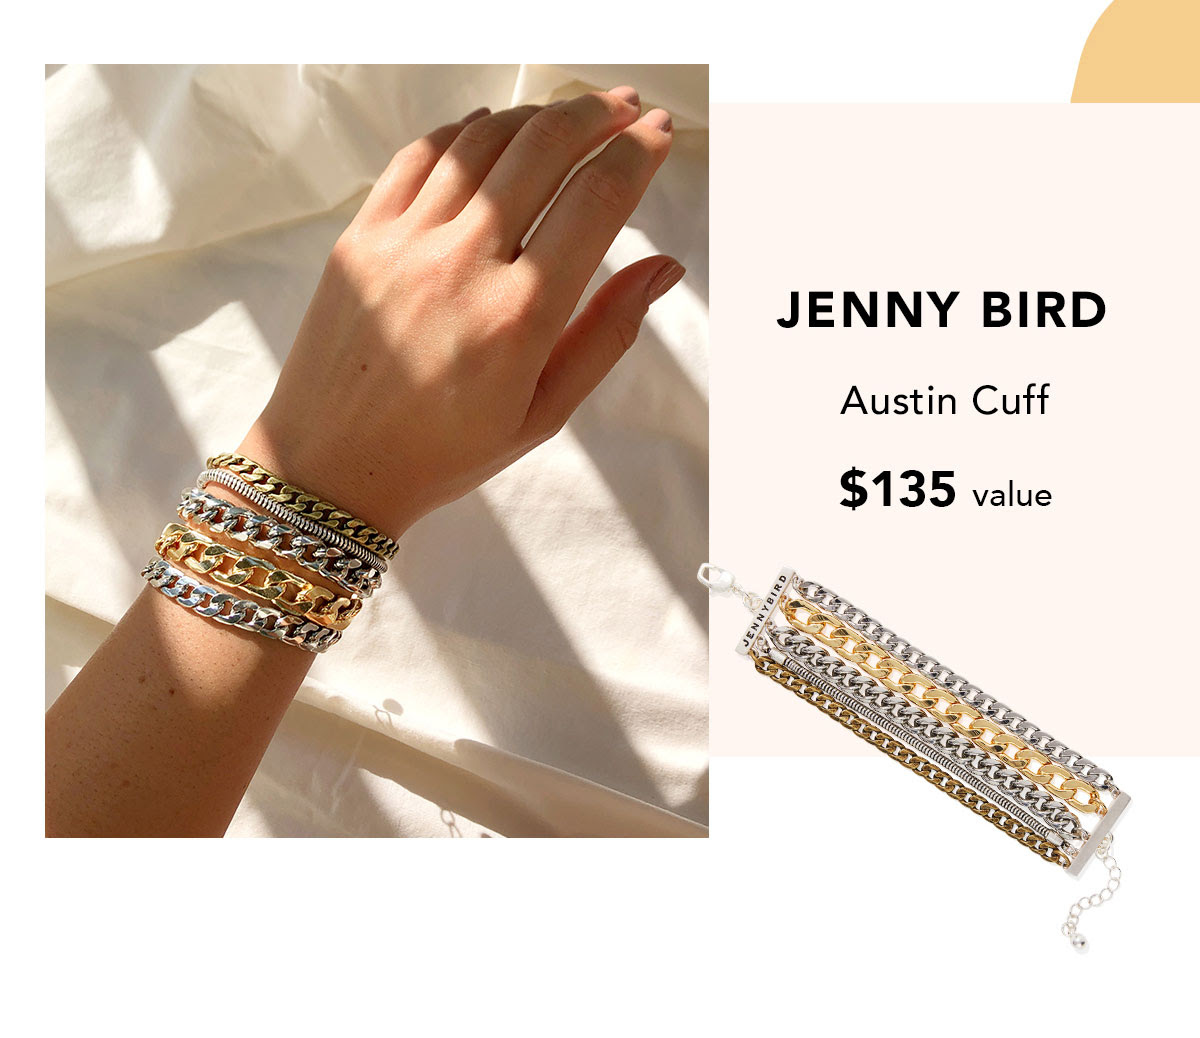 JENNY BIRD Austin Cuff $135 value